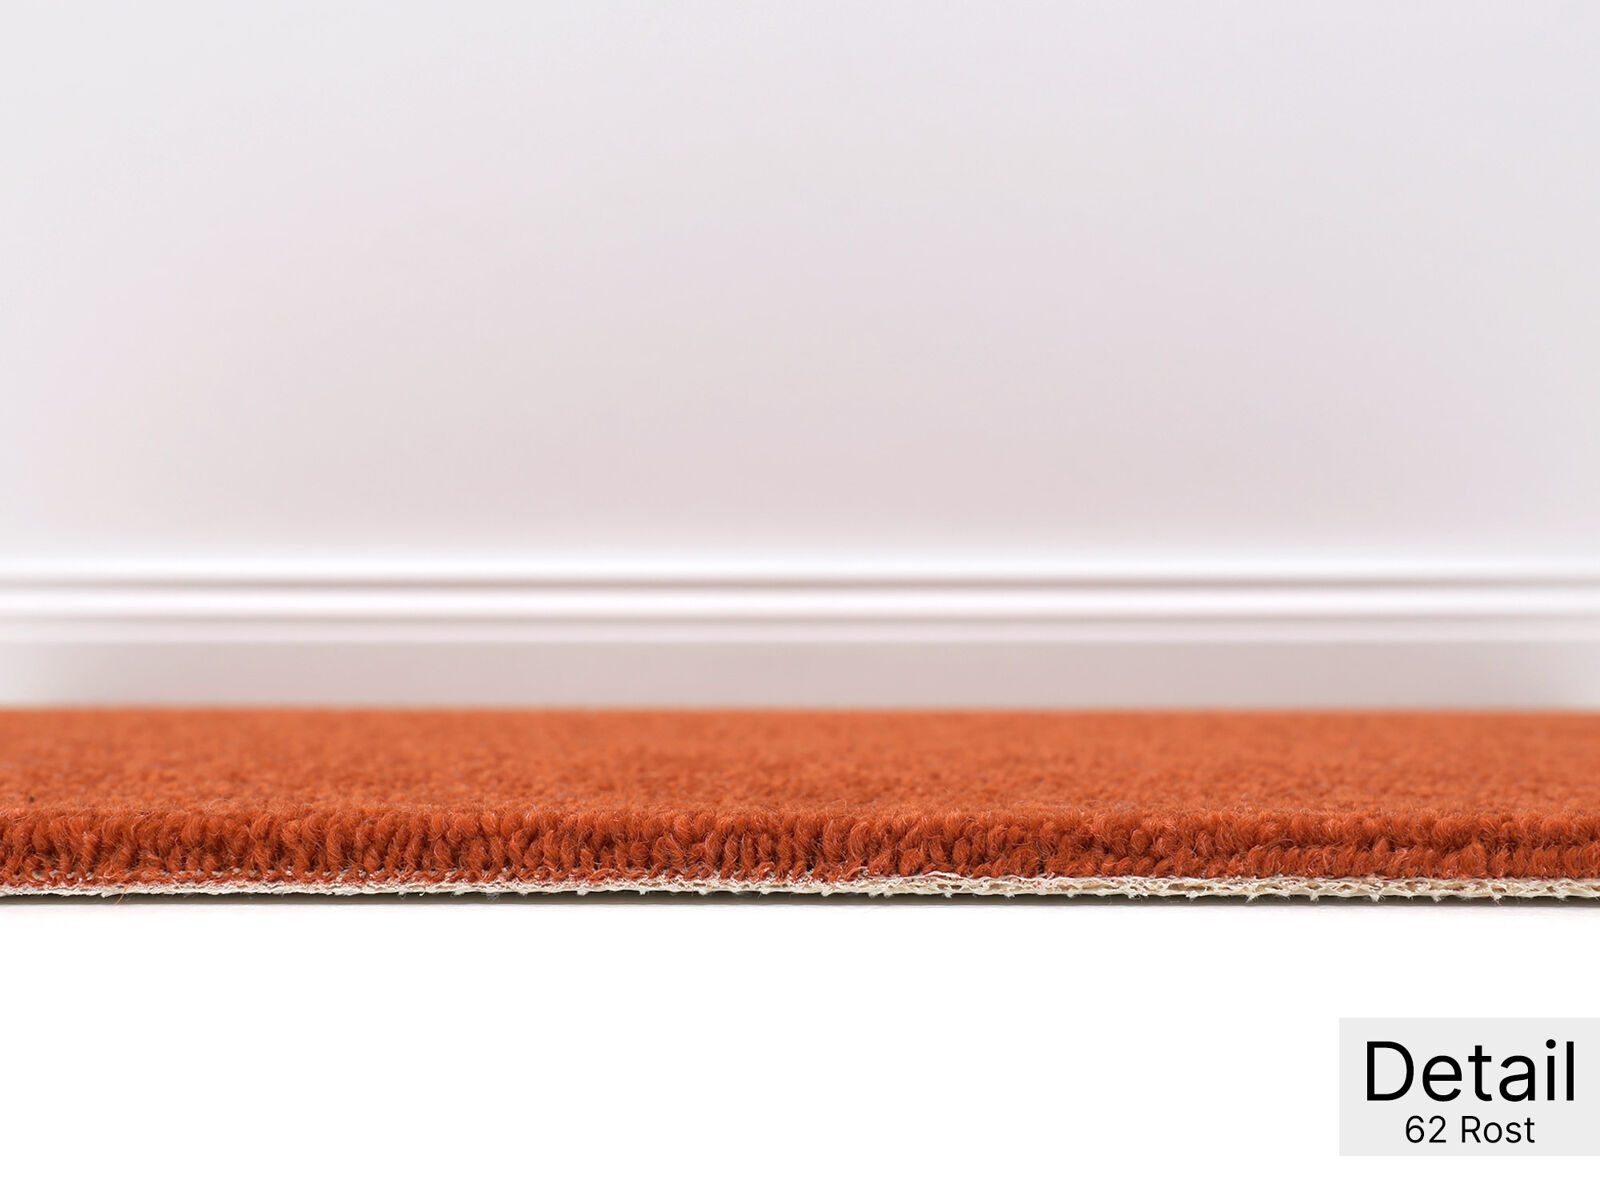 Tiara Piano Teppichboden | Frisè | 420cm Breite & Raummaß